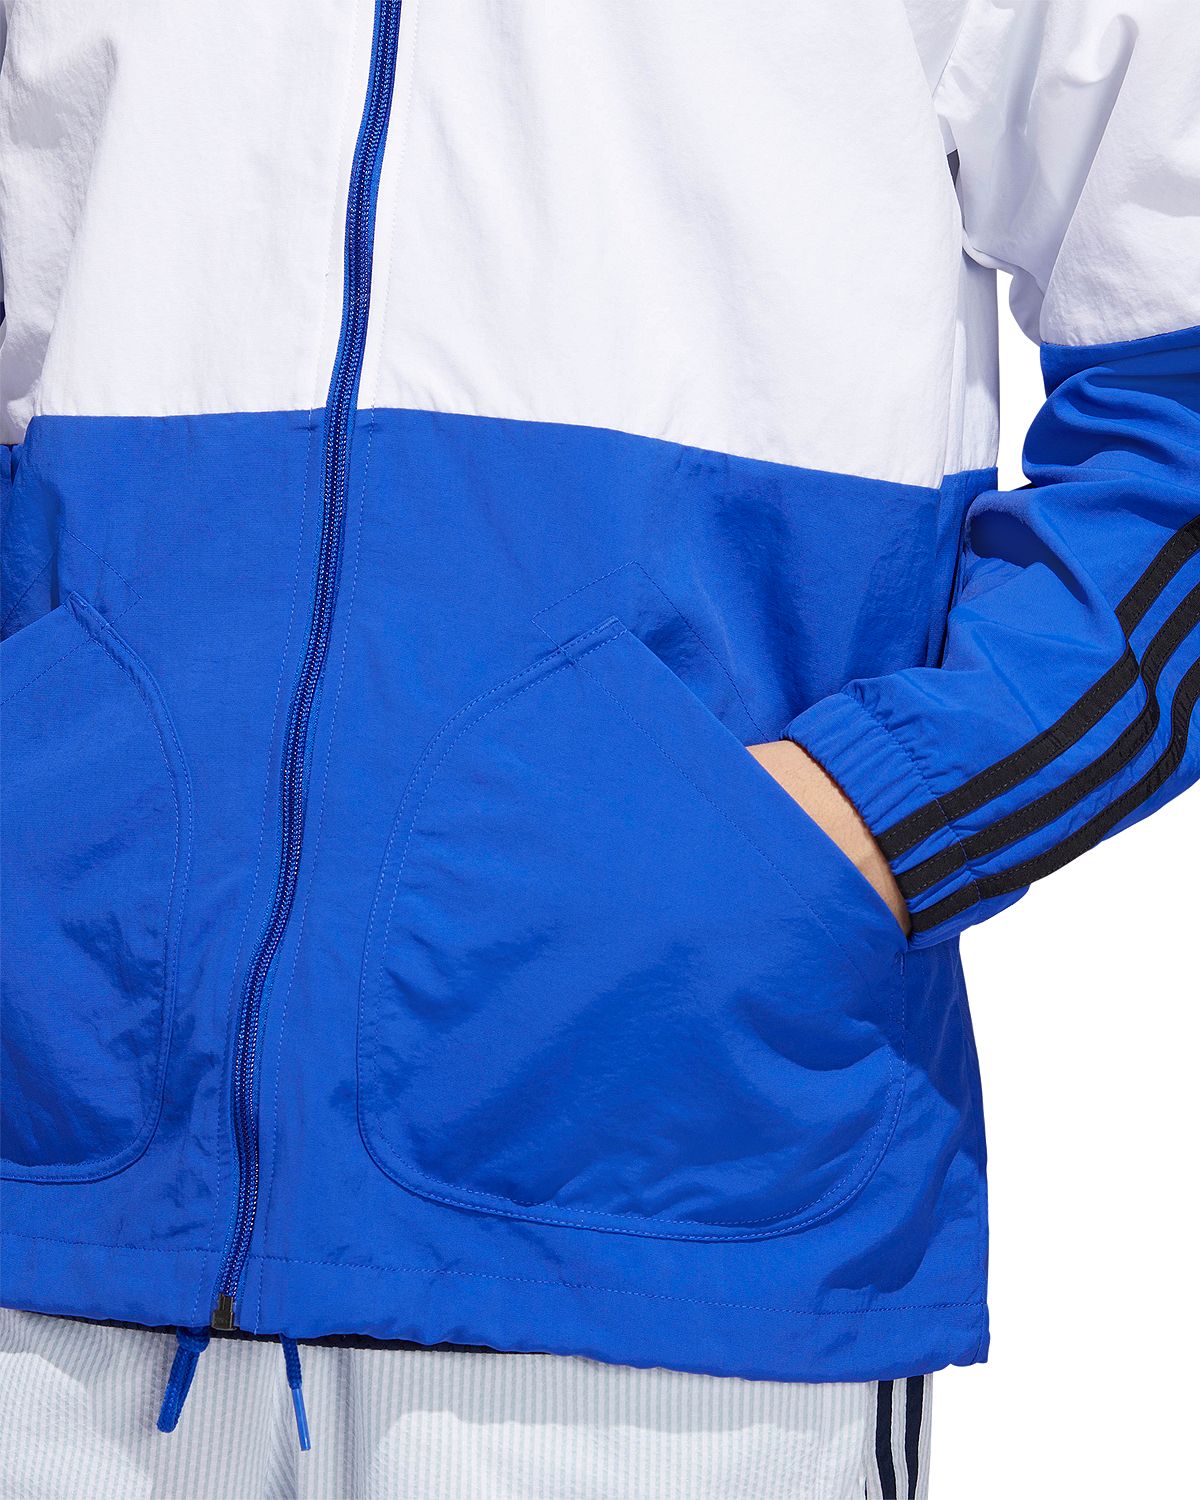 Adidas Originals Big Stripe Track Jacket Navy